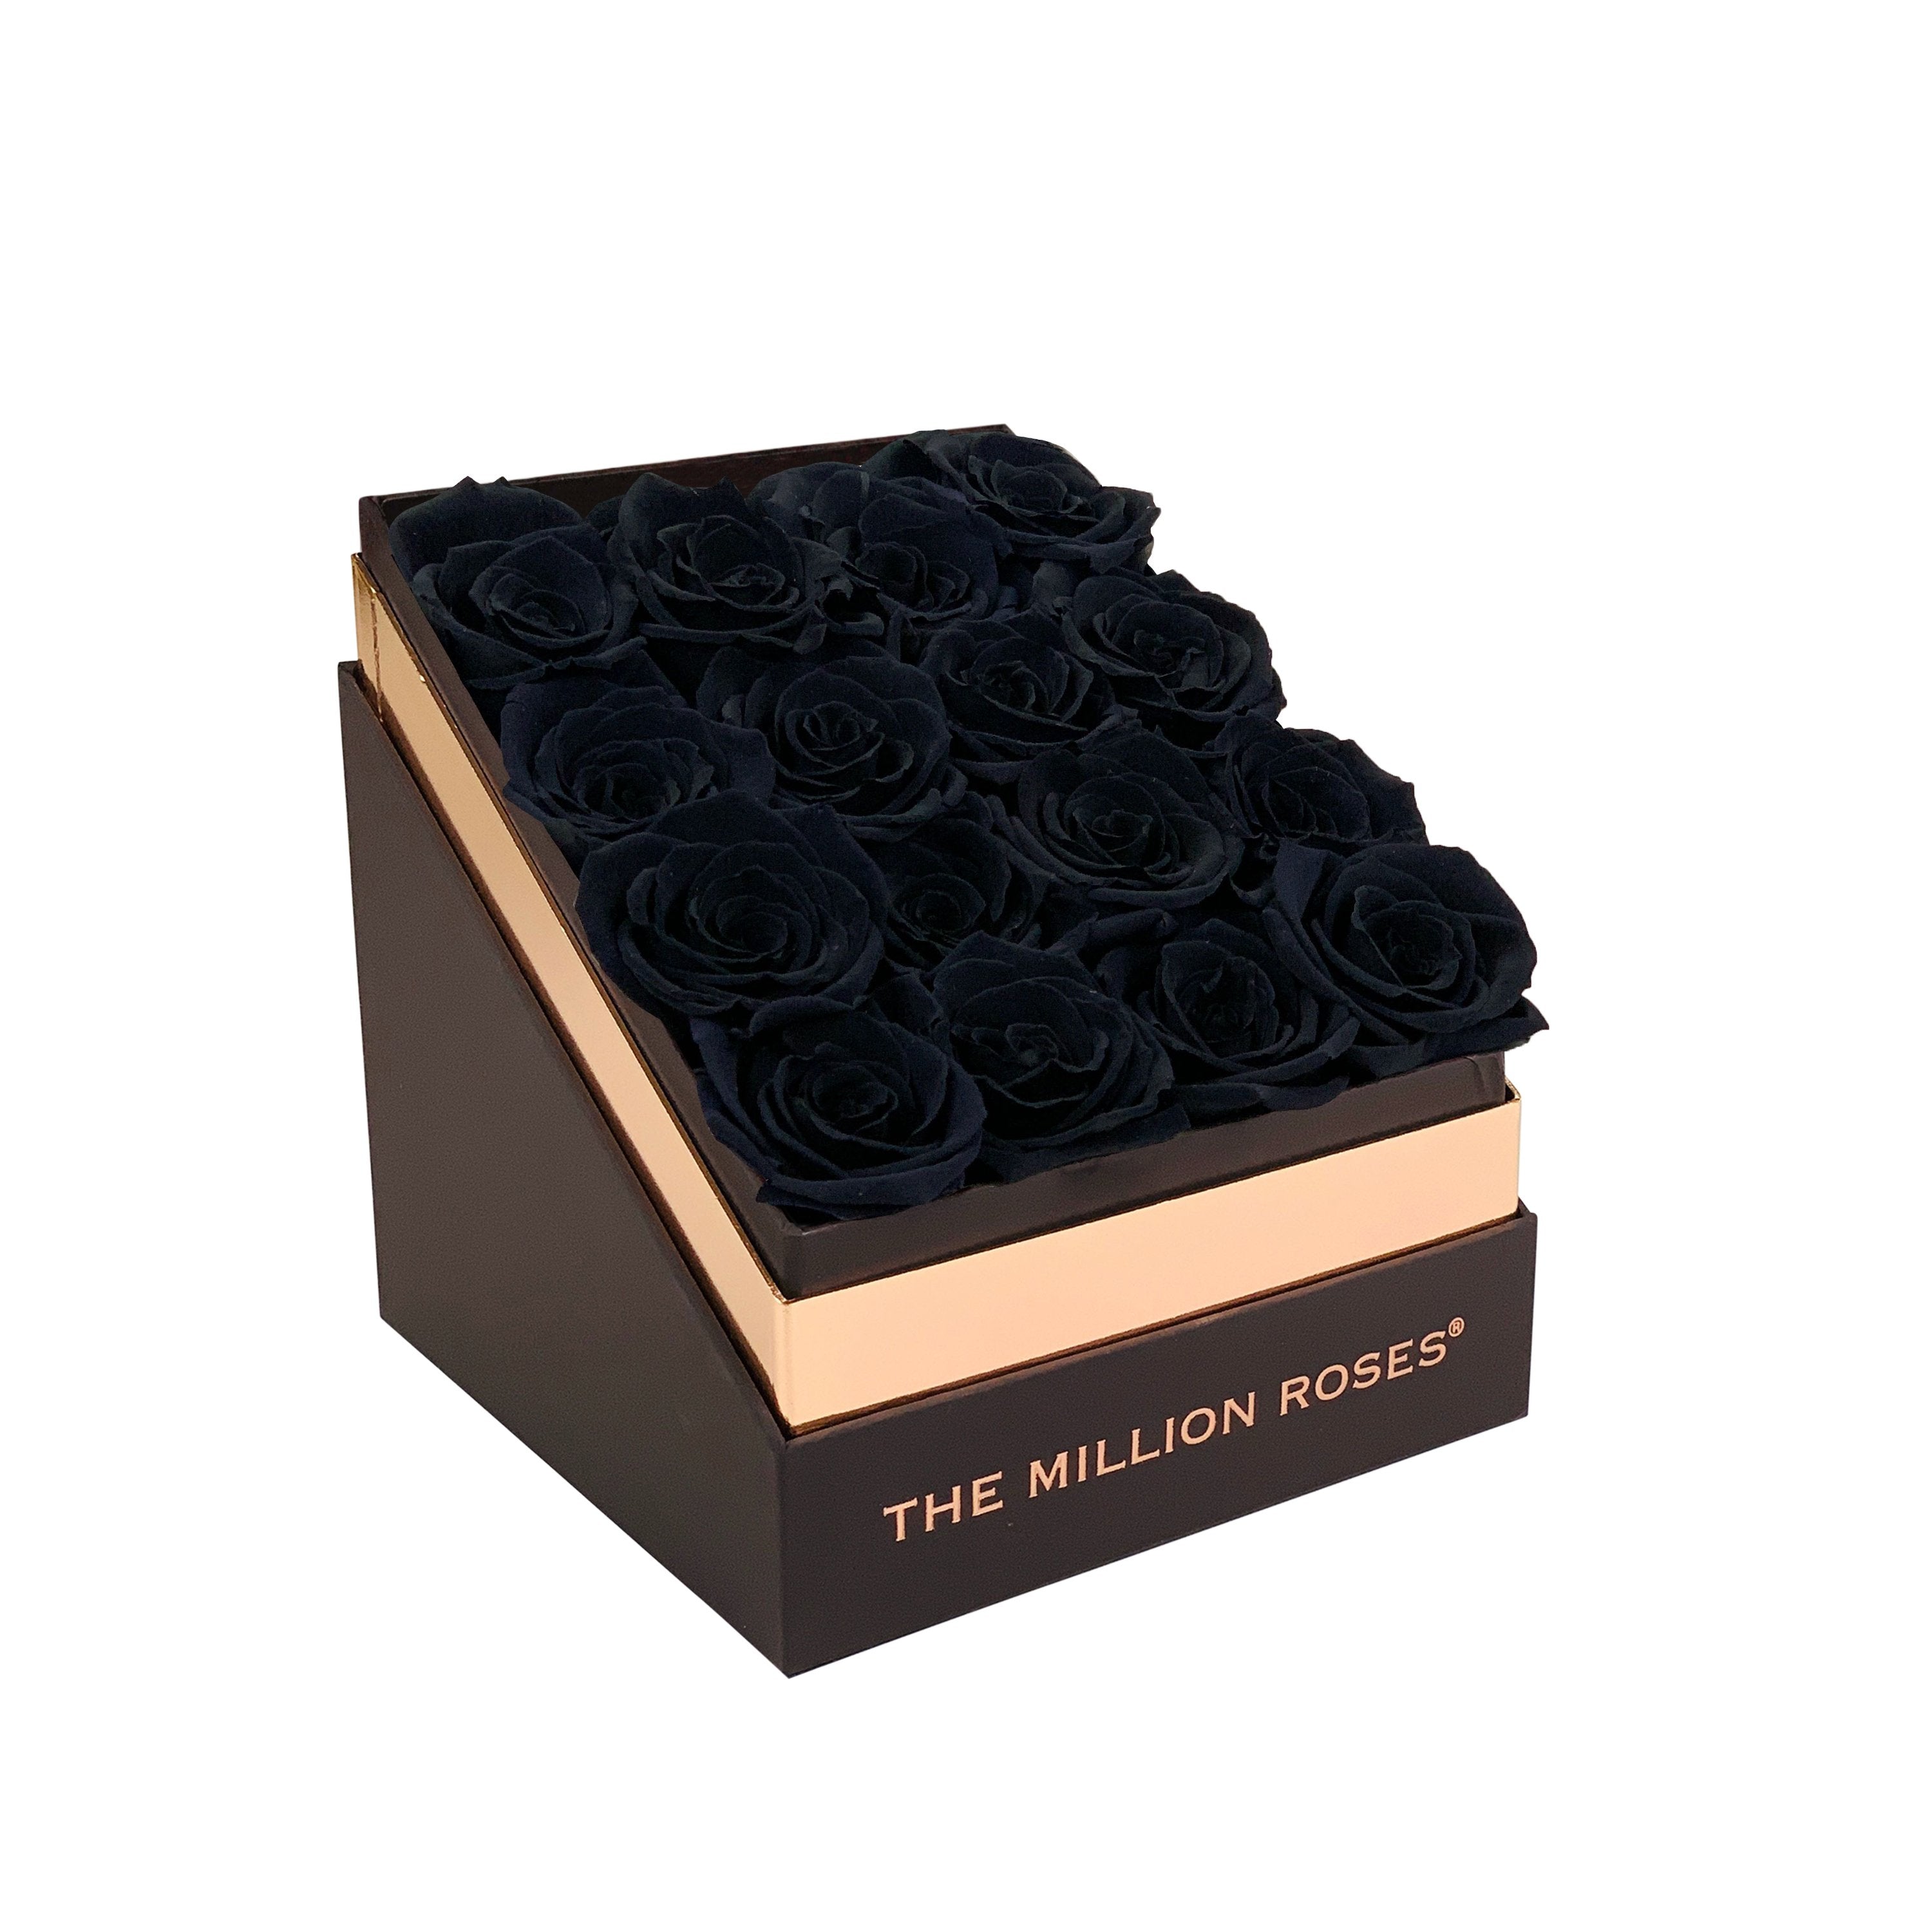 The Square - Coffee Box - Black Roses